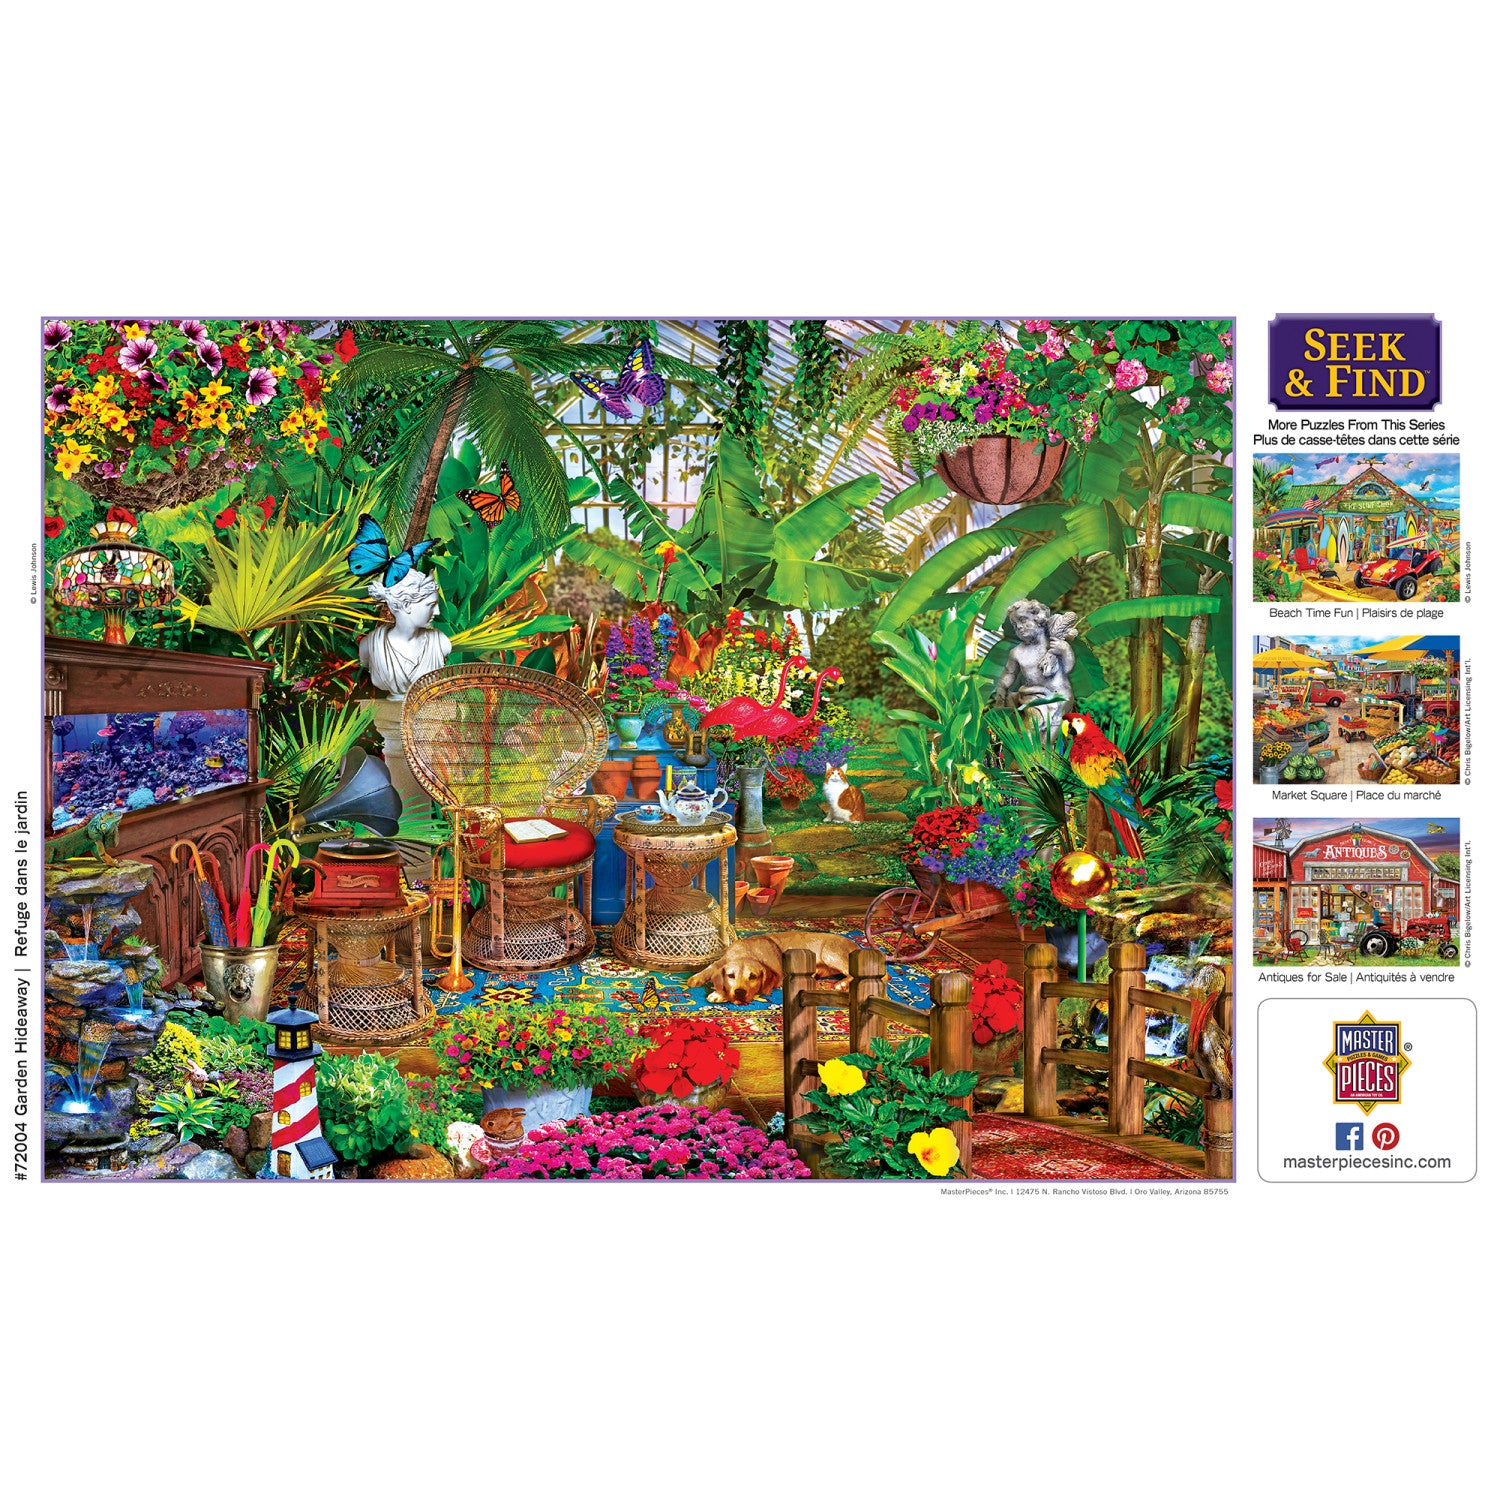 Seek & Find - Garden Hideaway 1000 Piece Puzzle